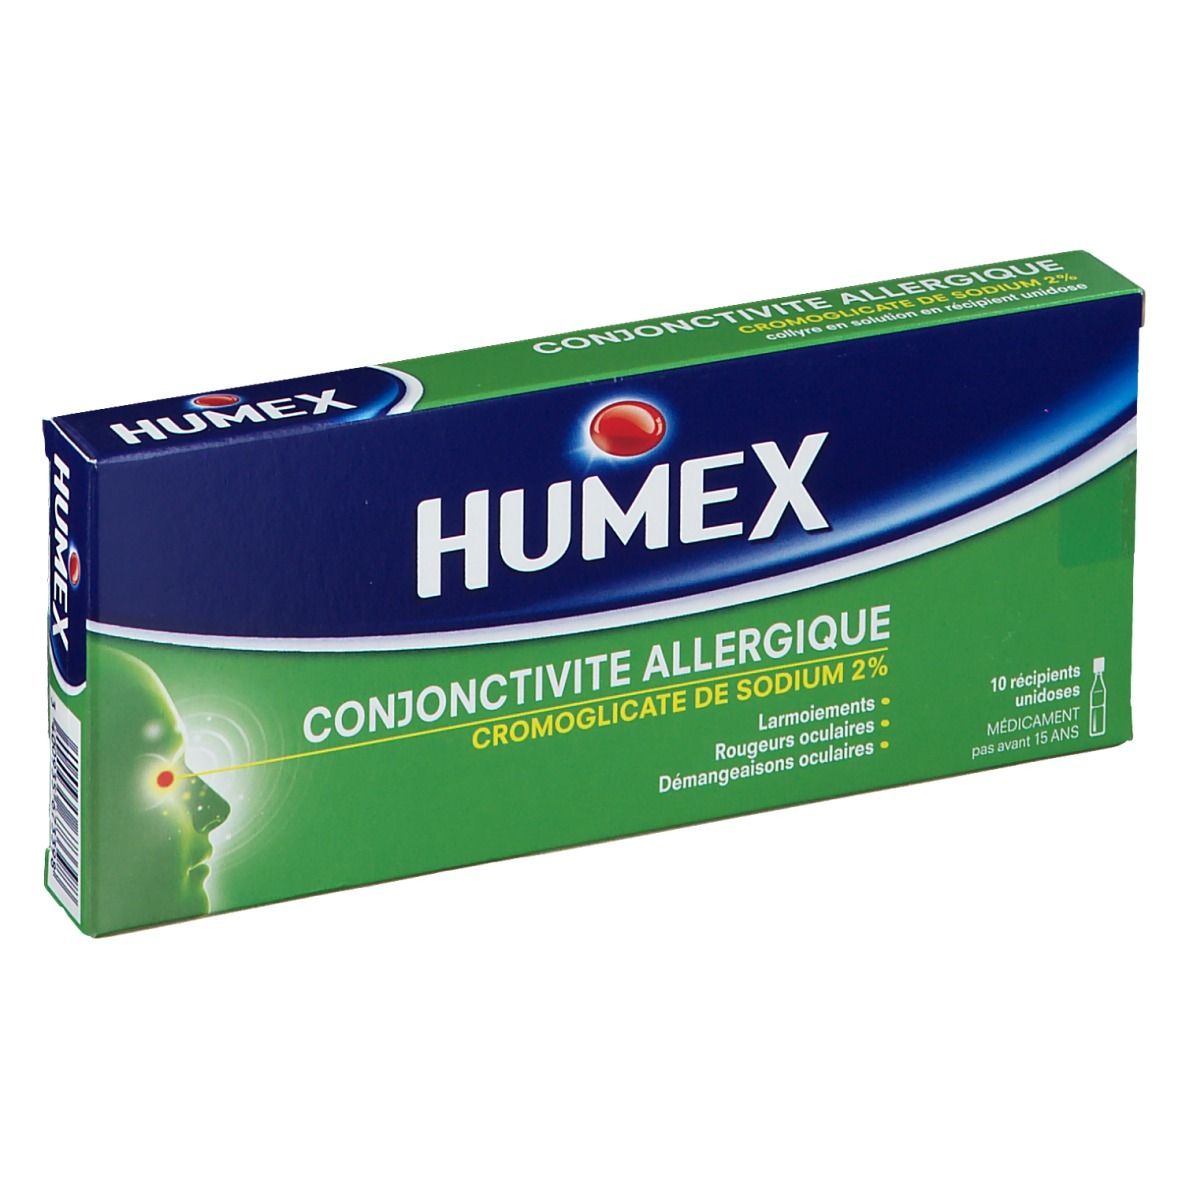 Humex Conjonctivite Allergique